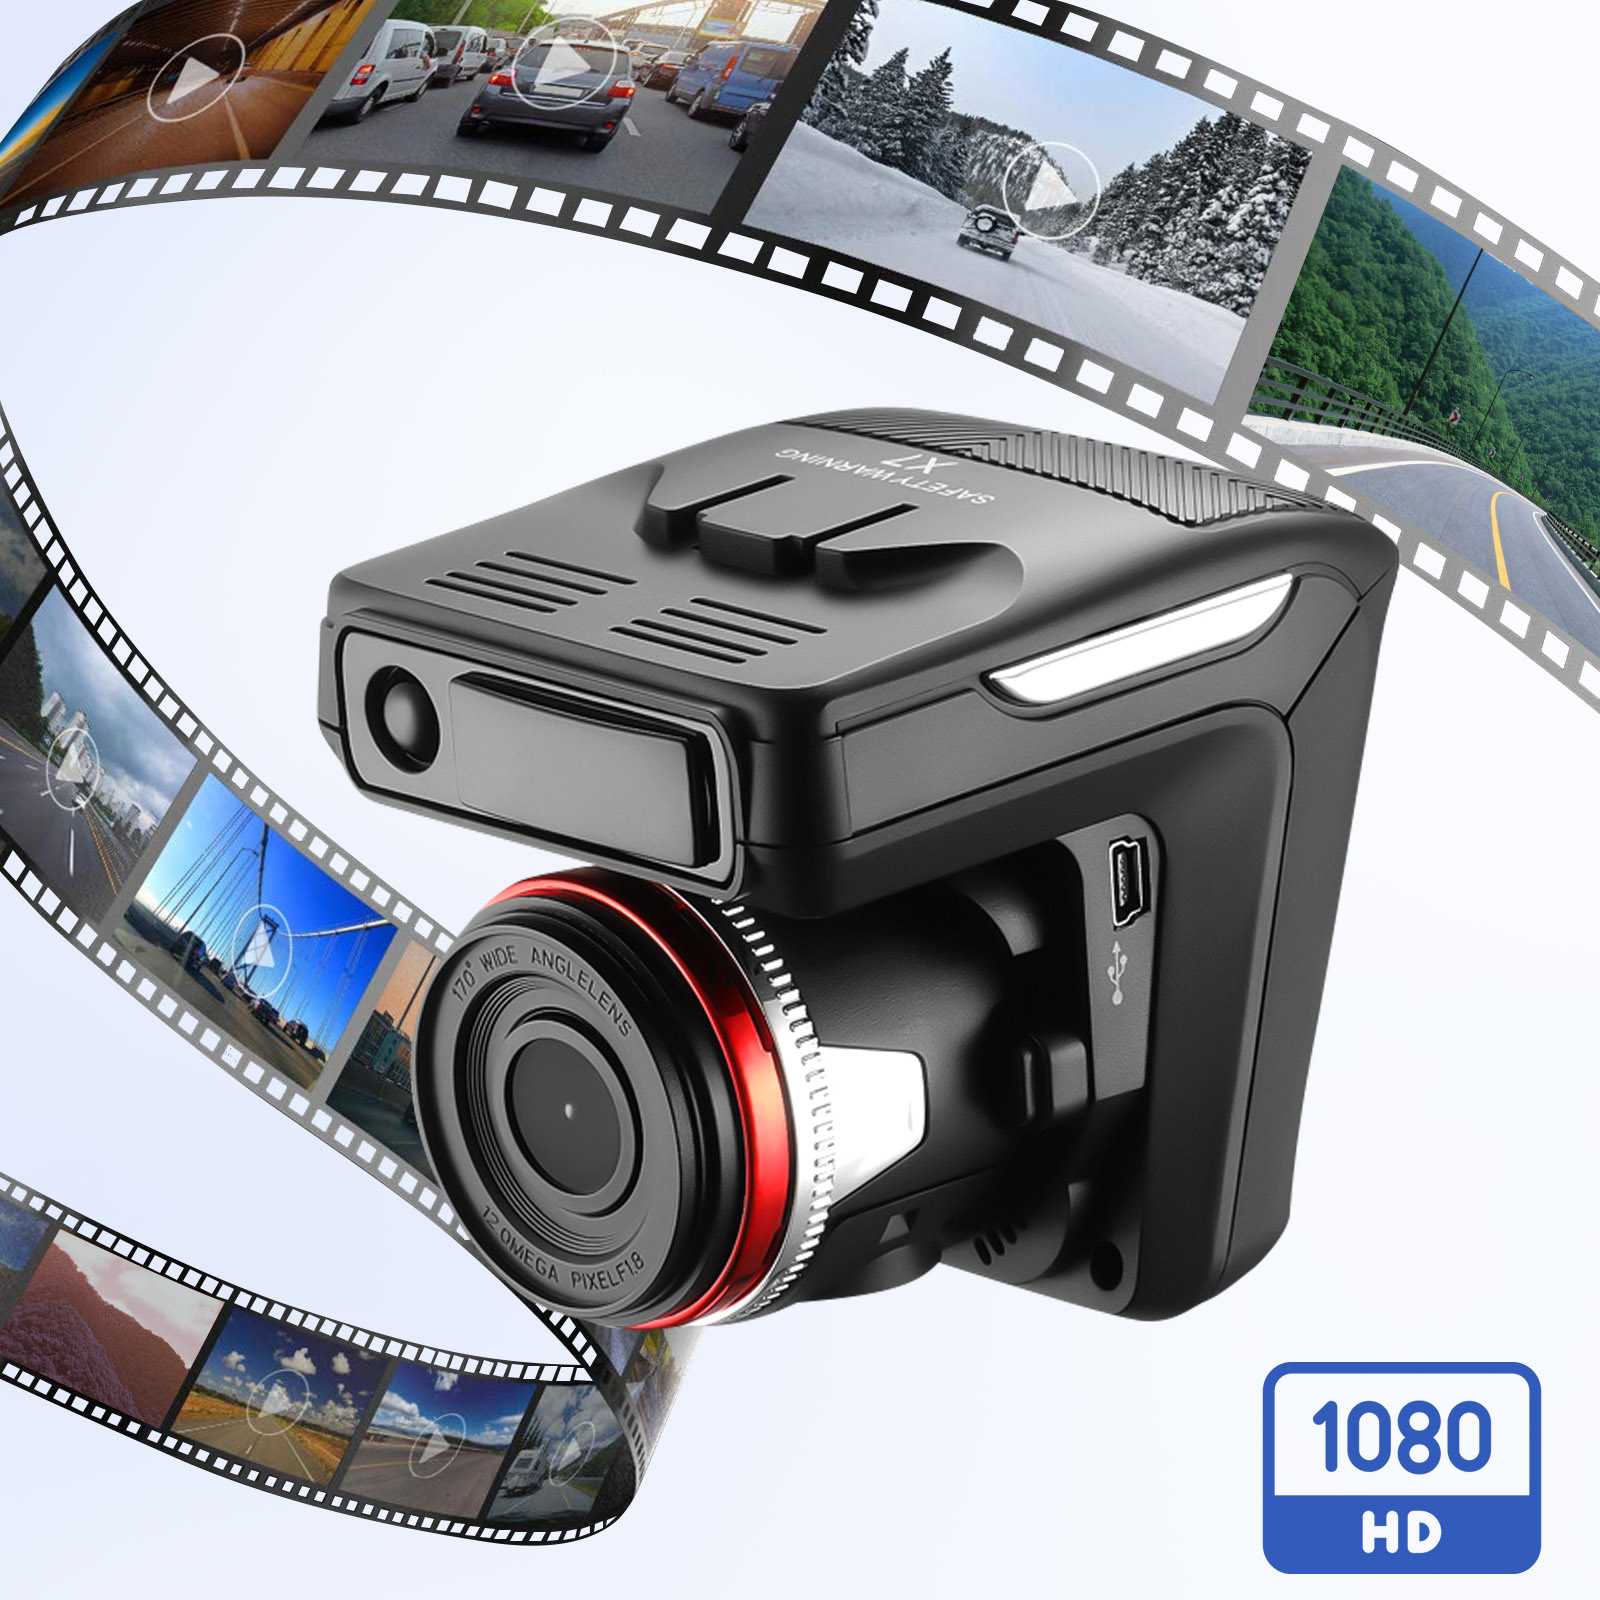 Dashcam Full HD 1080p Caméra Voiture avec Micro, Fonction